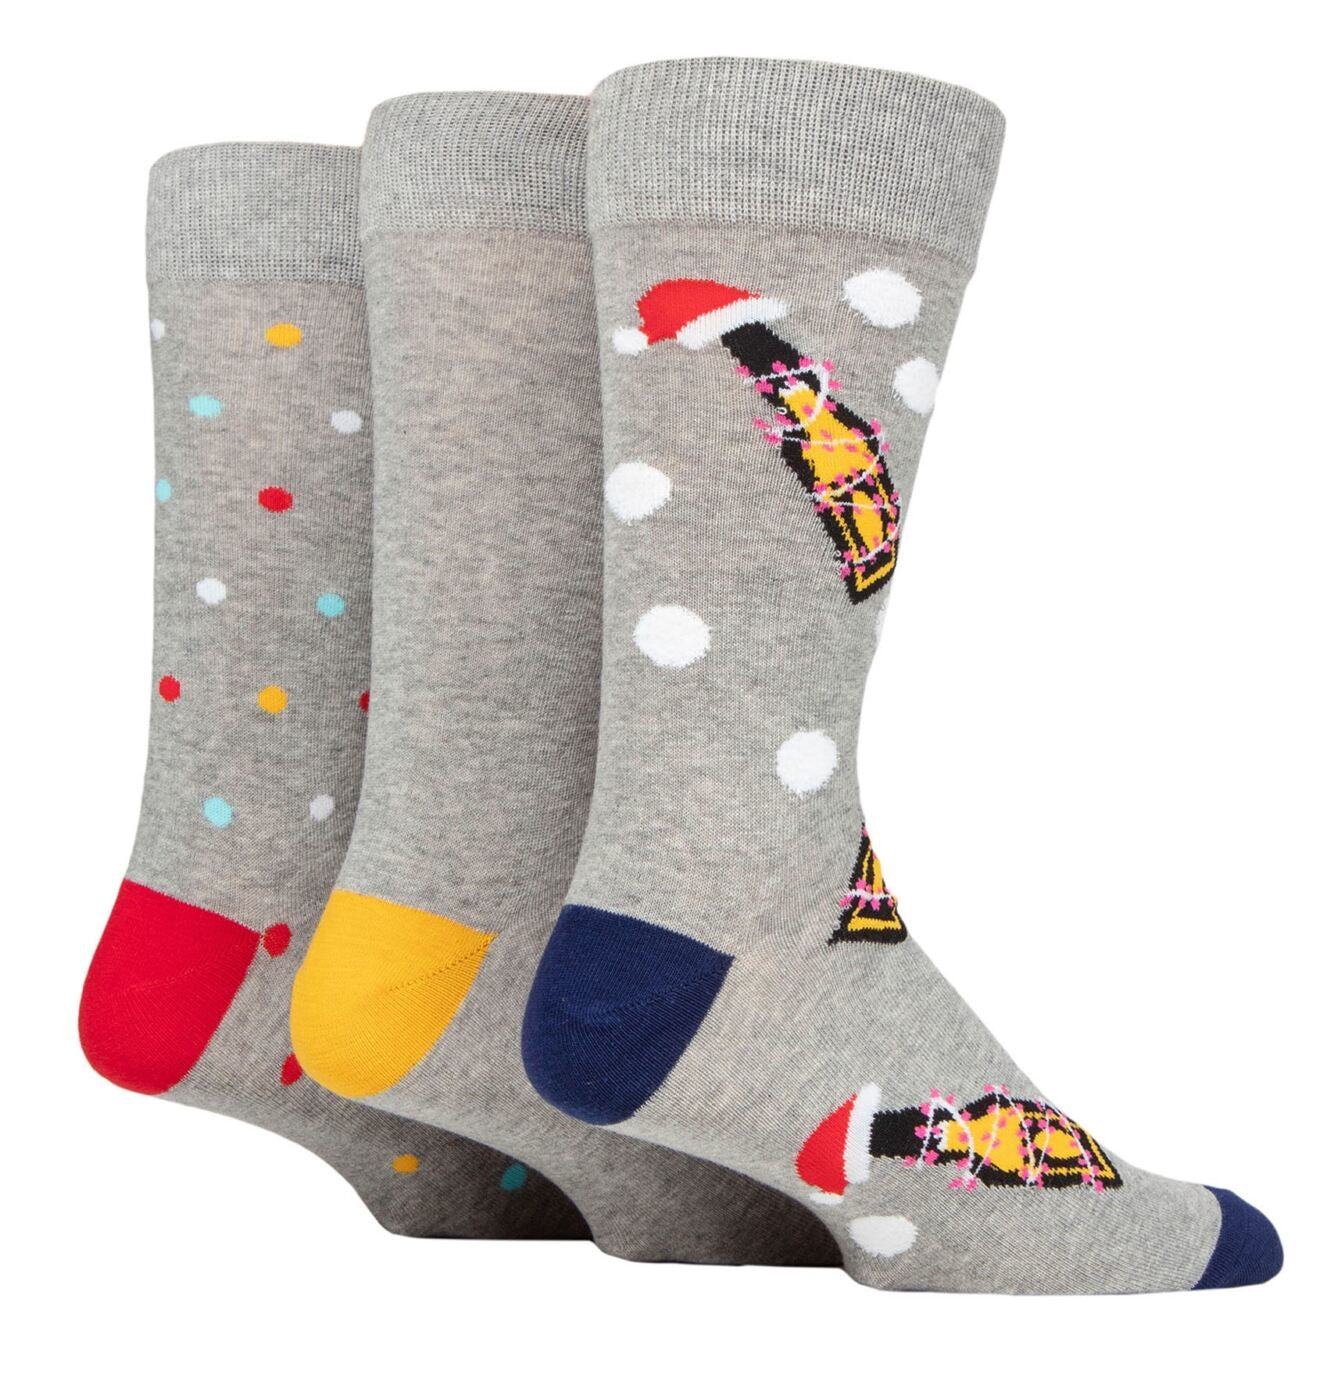 WILDFEET 3PK  Christmas Novelty Cotton Socks - Mens 7-11